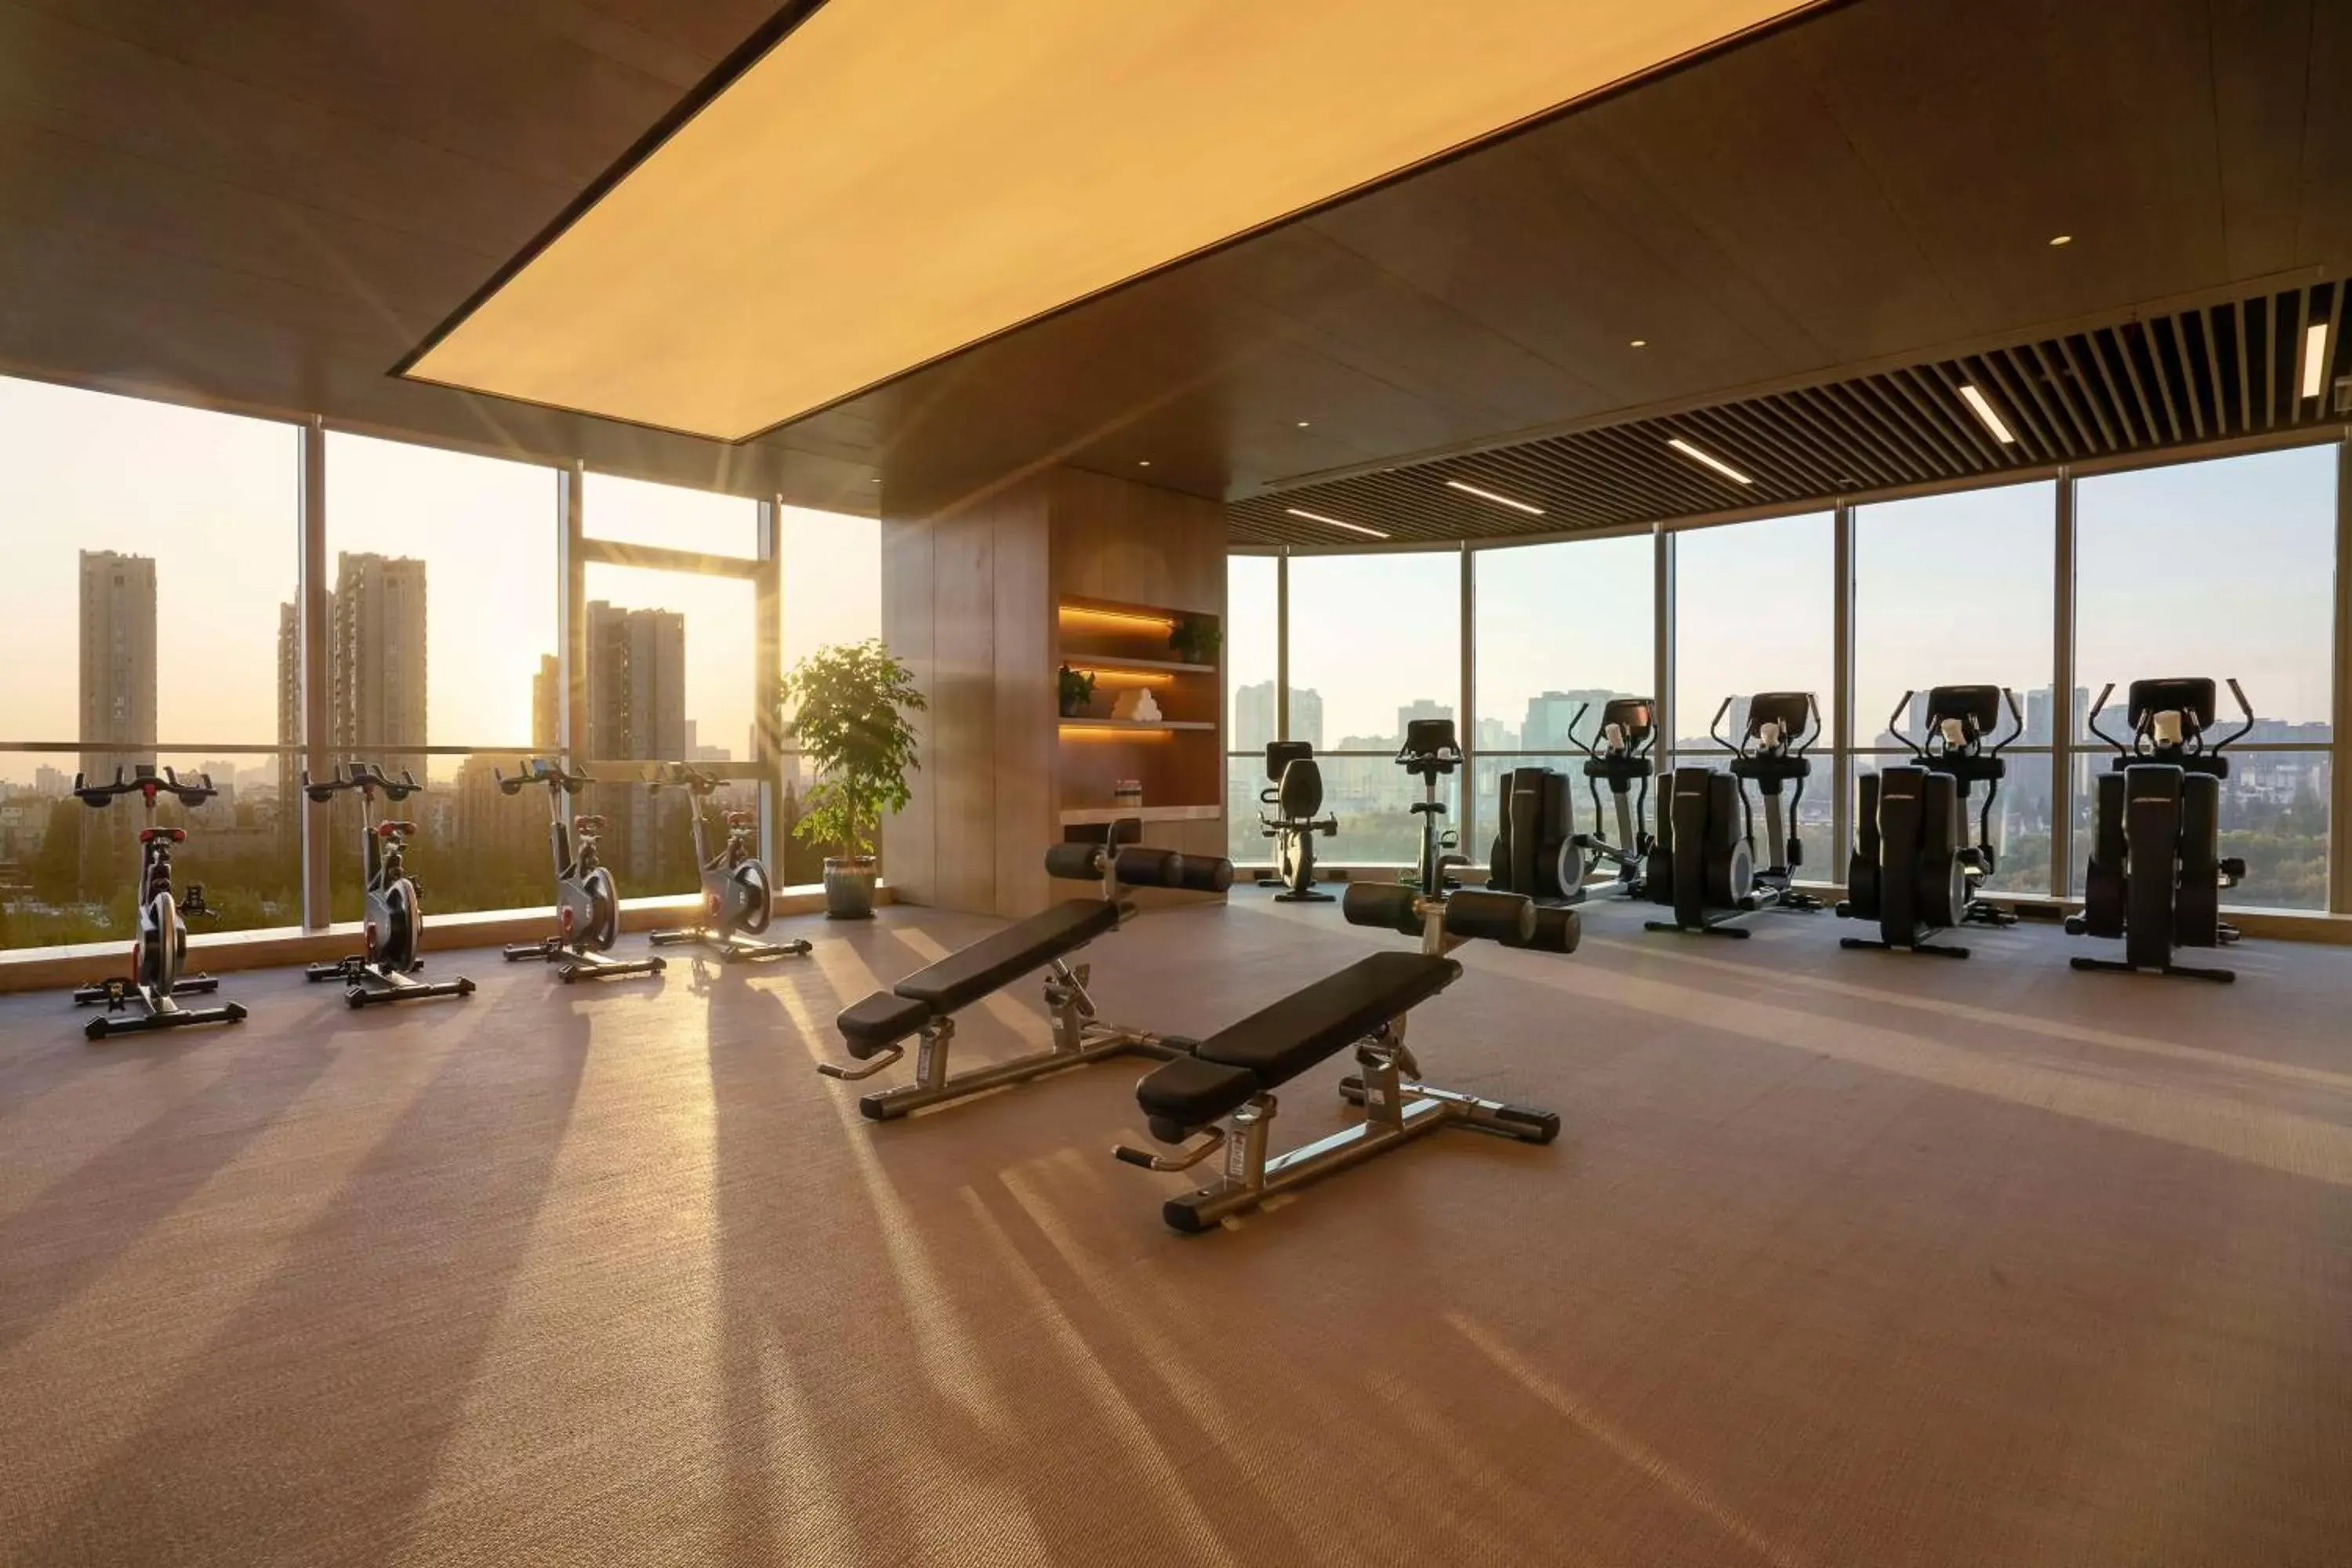 Fitness centre/facilities, Fitness Center/Facilities in Kempinski Hotel Nanjing